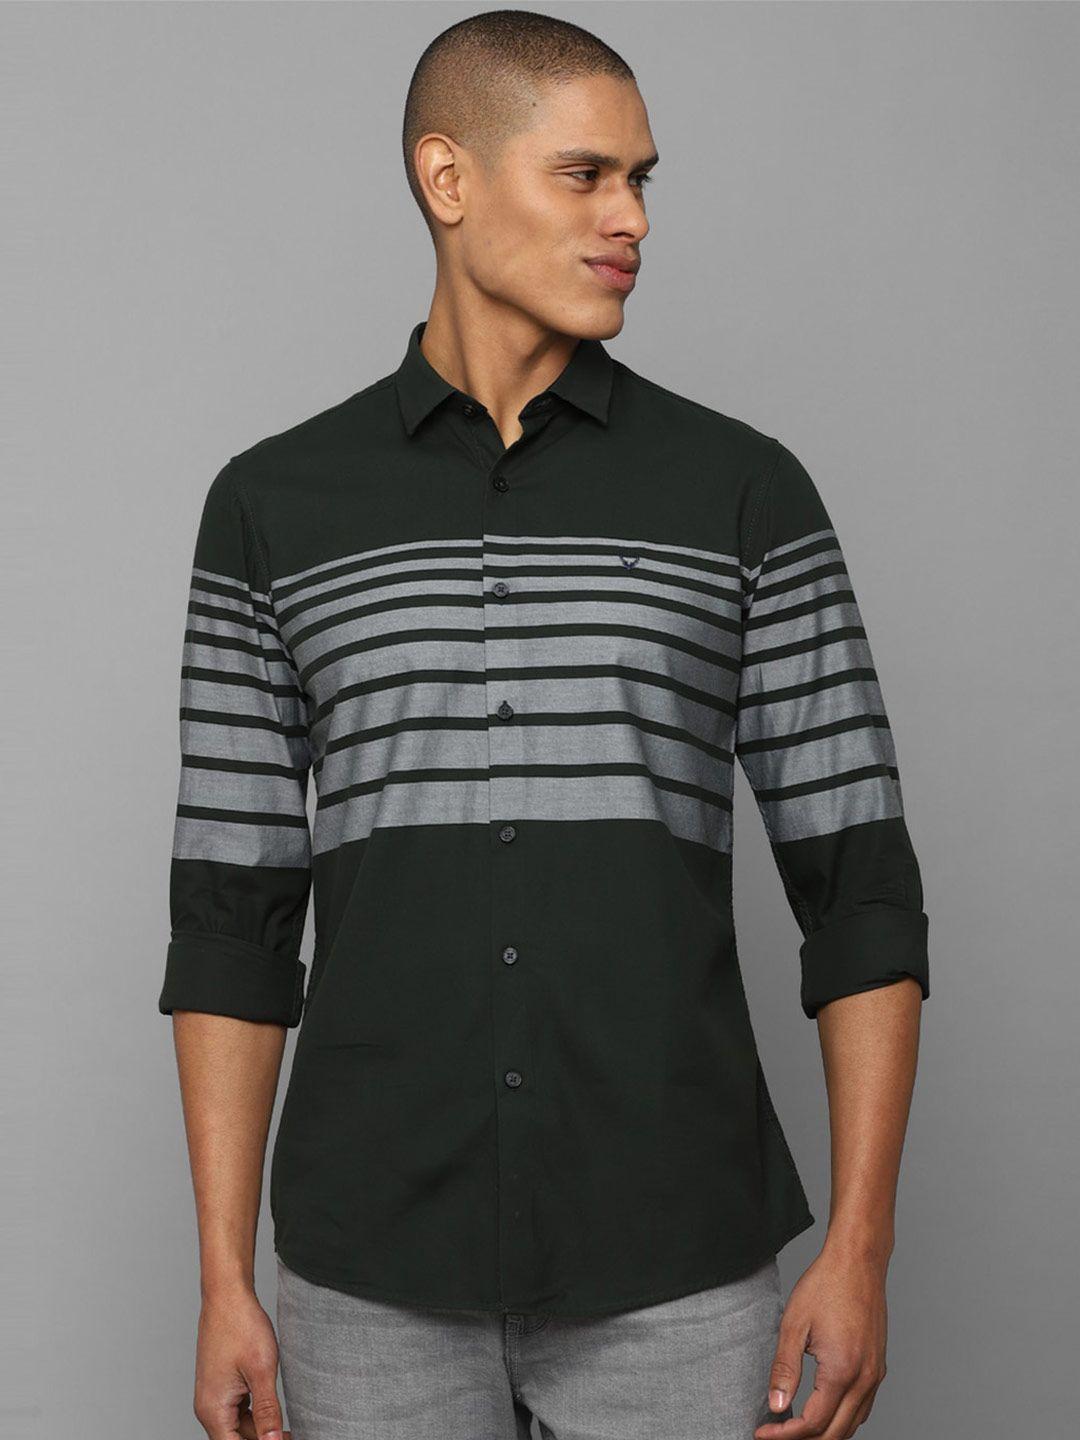 allen solly men slim fit horizontal striped casual shirt